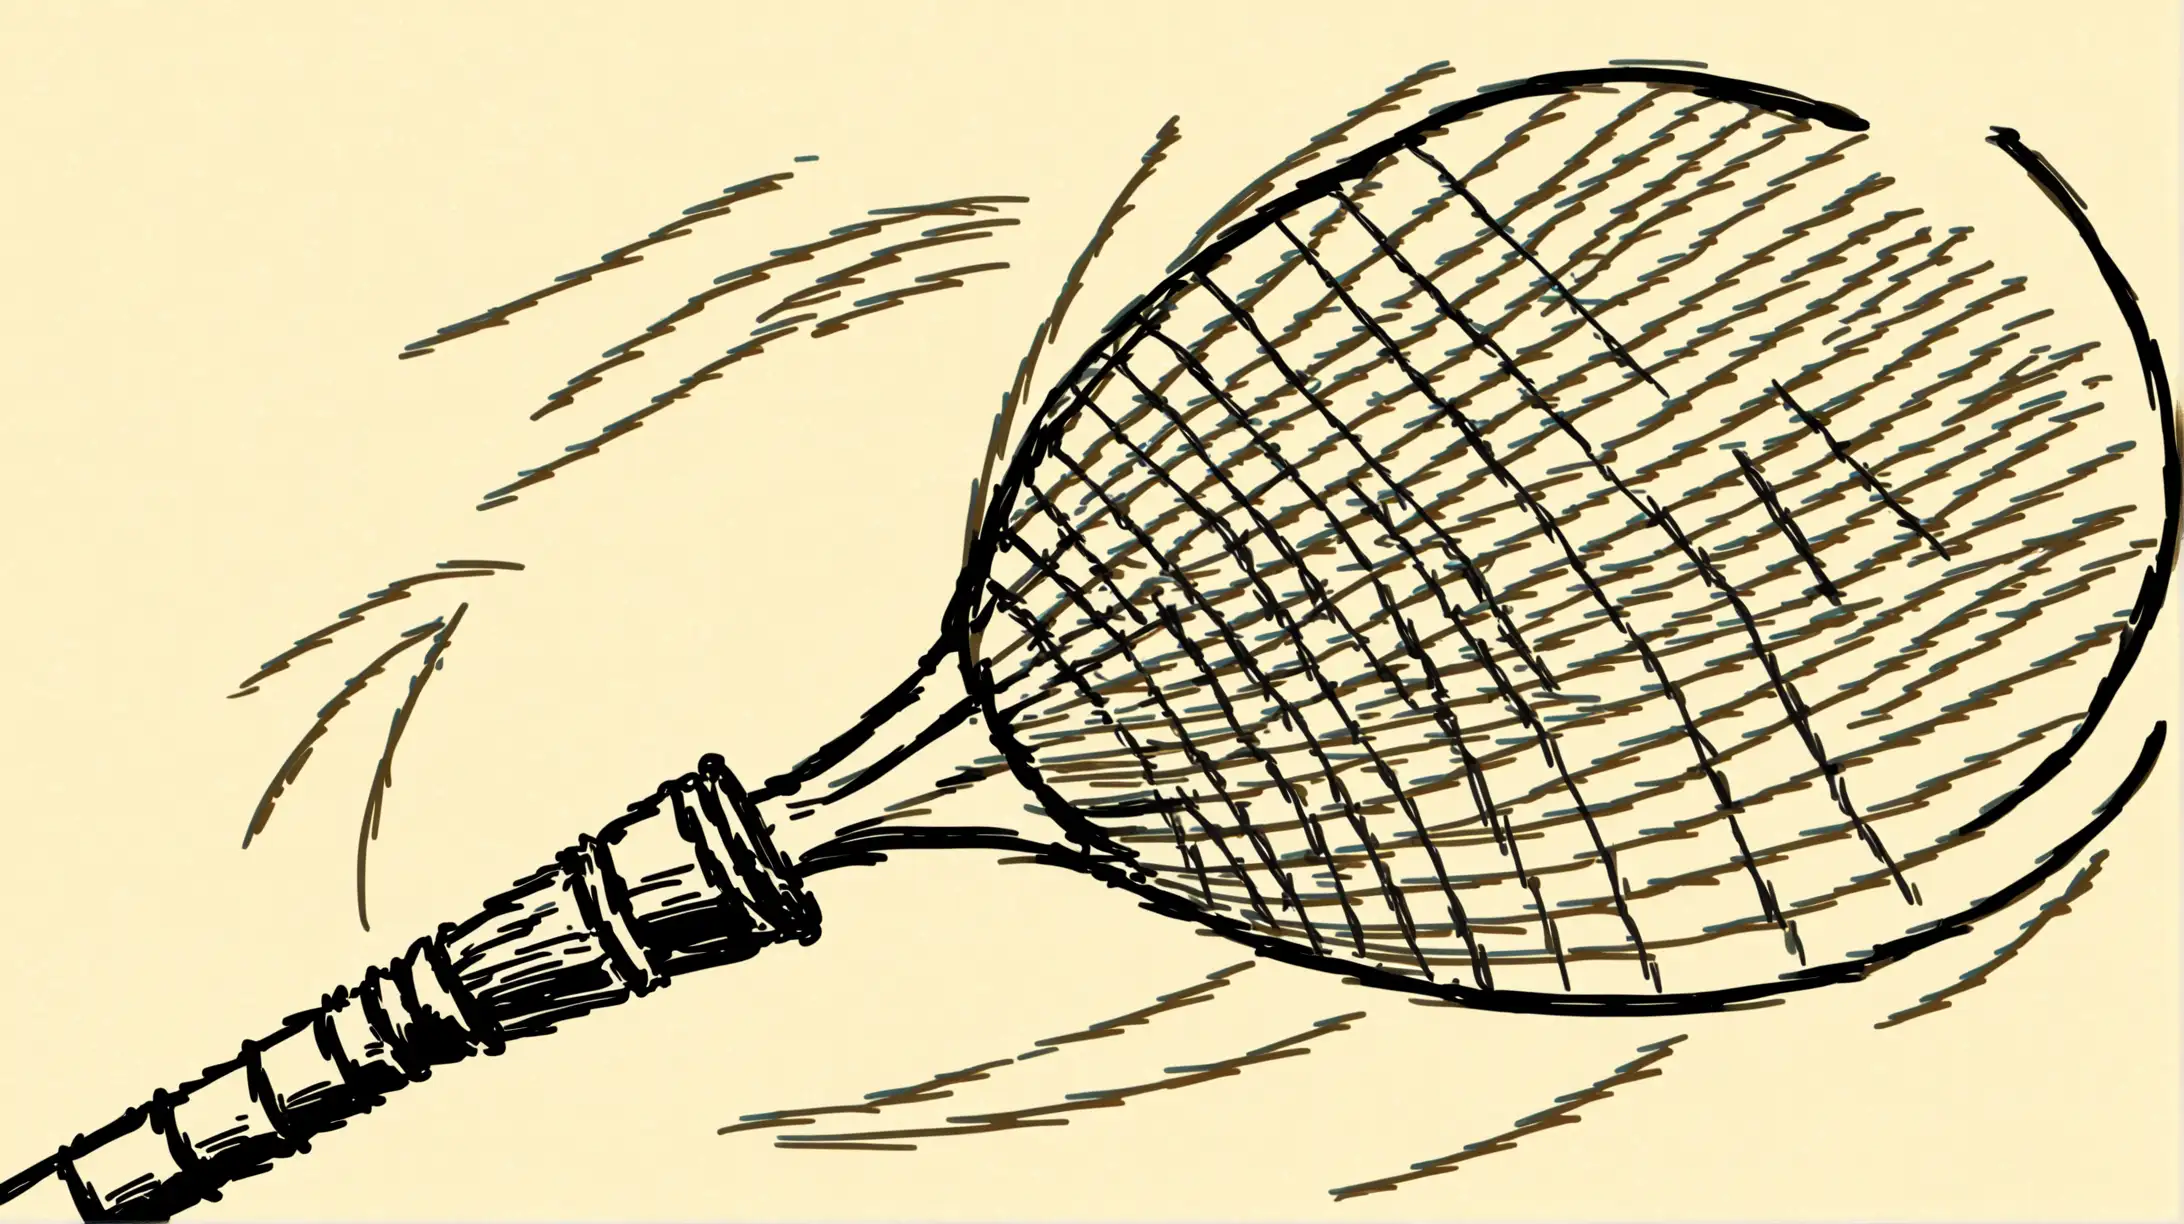 CloseUp HandDrawn Badminton Illustration in Vector Style